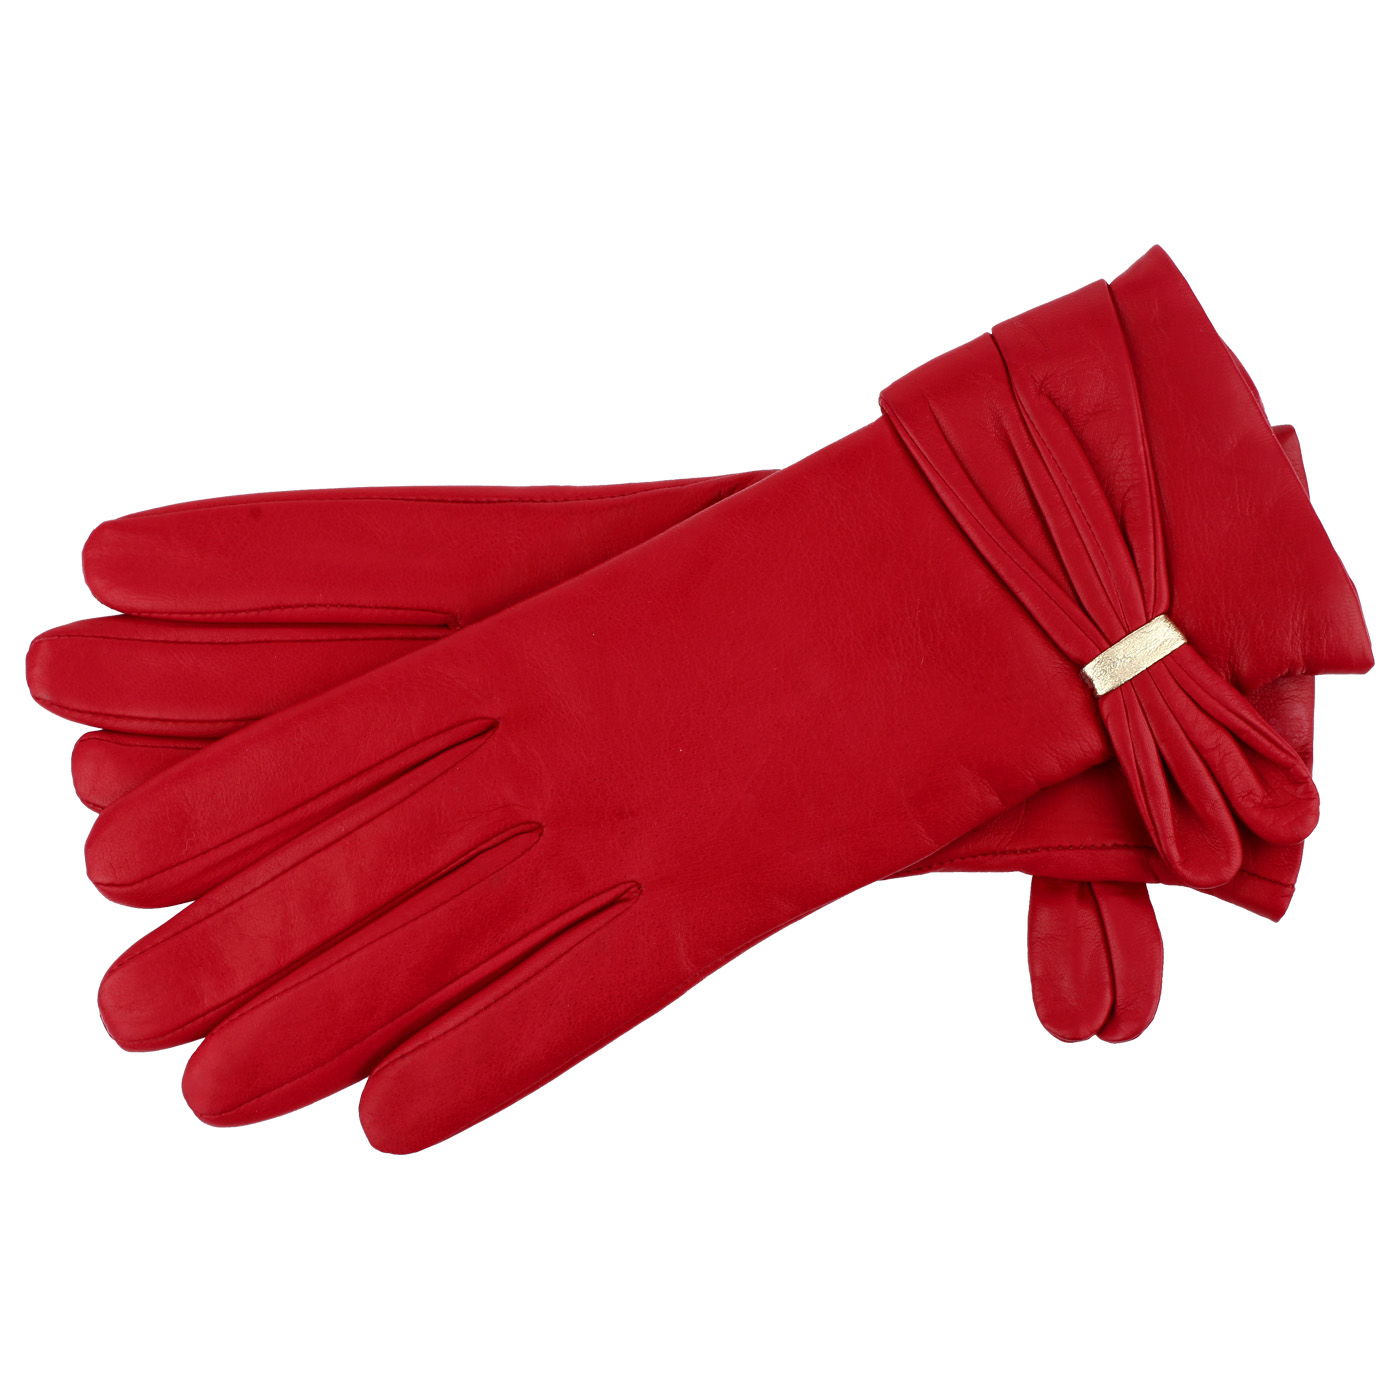 Dal Dosso Красные перчатки